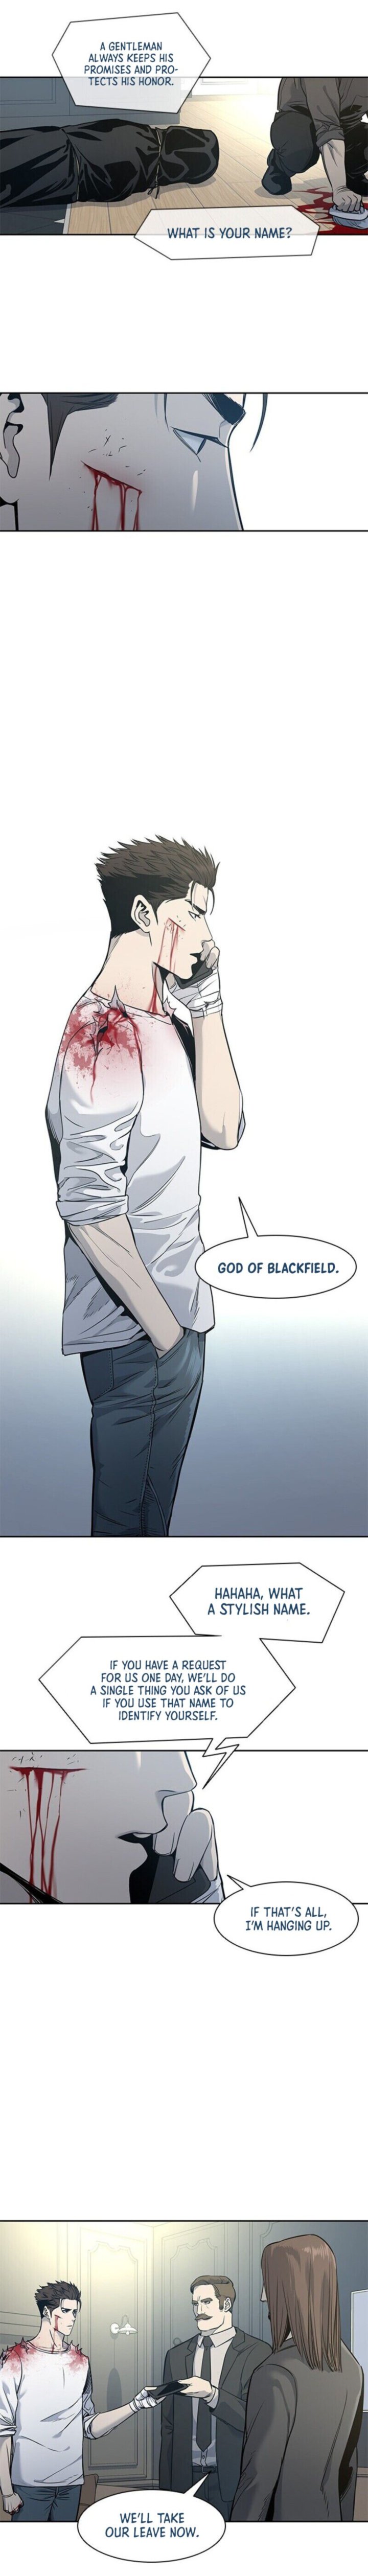 God Of Blackfield 36 6